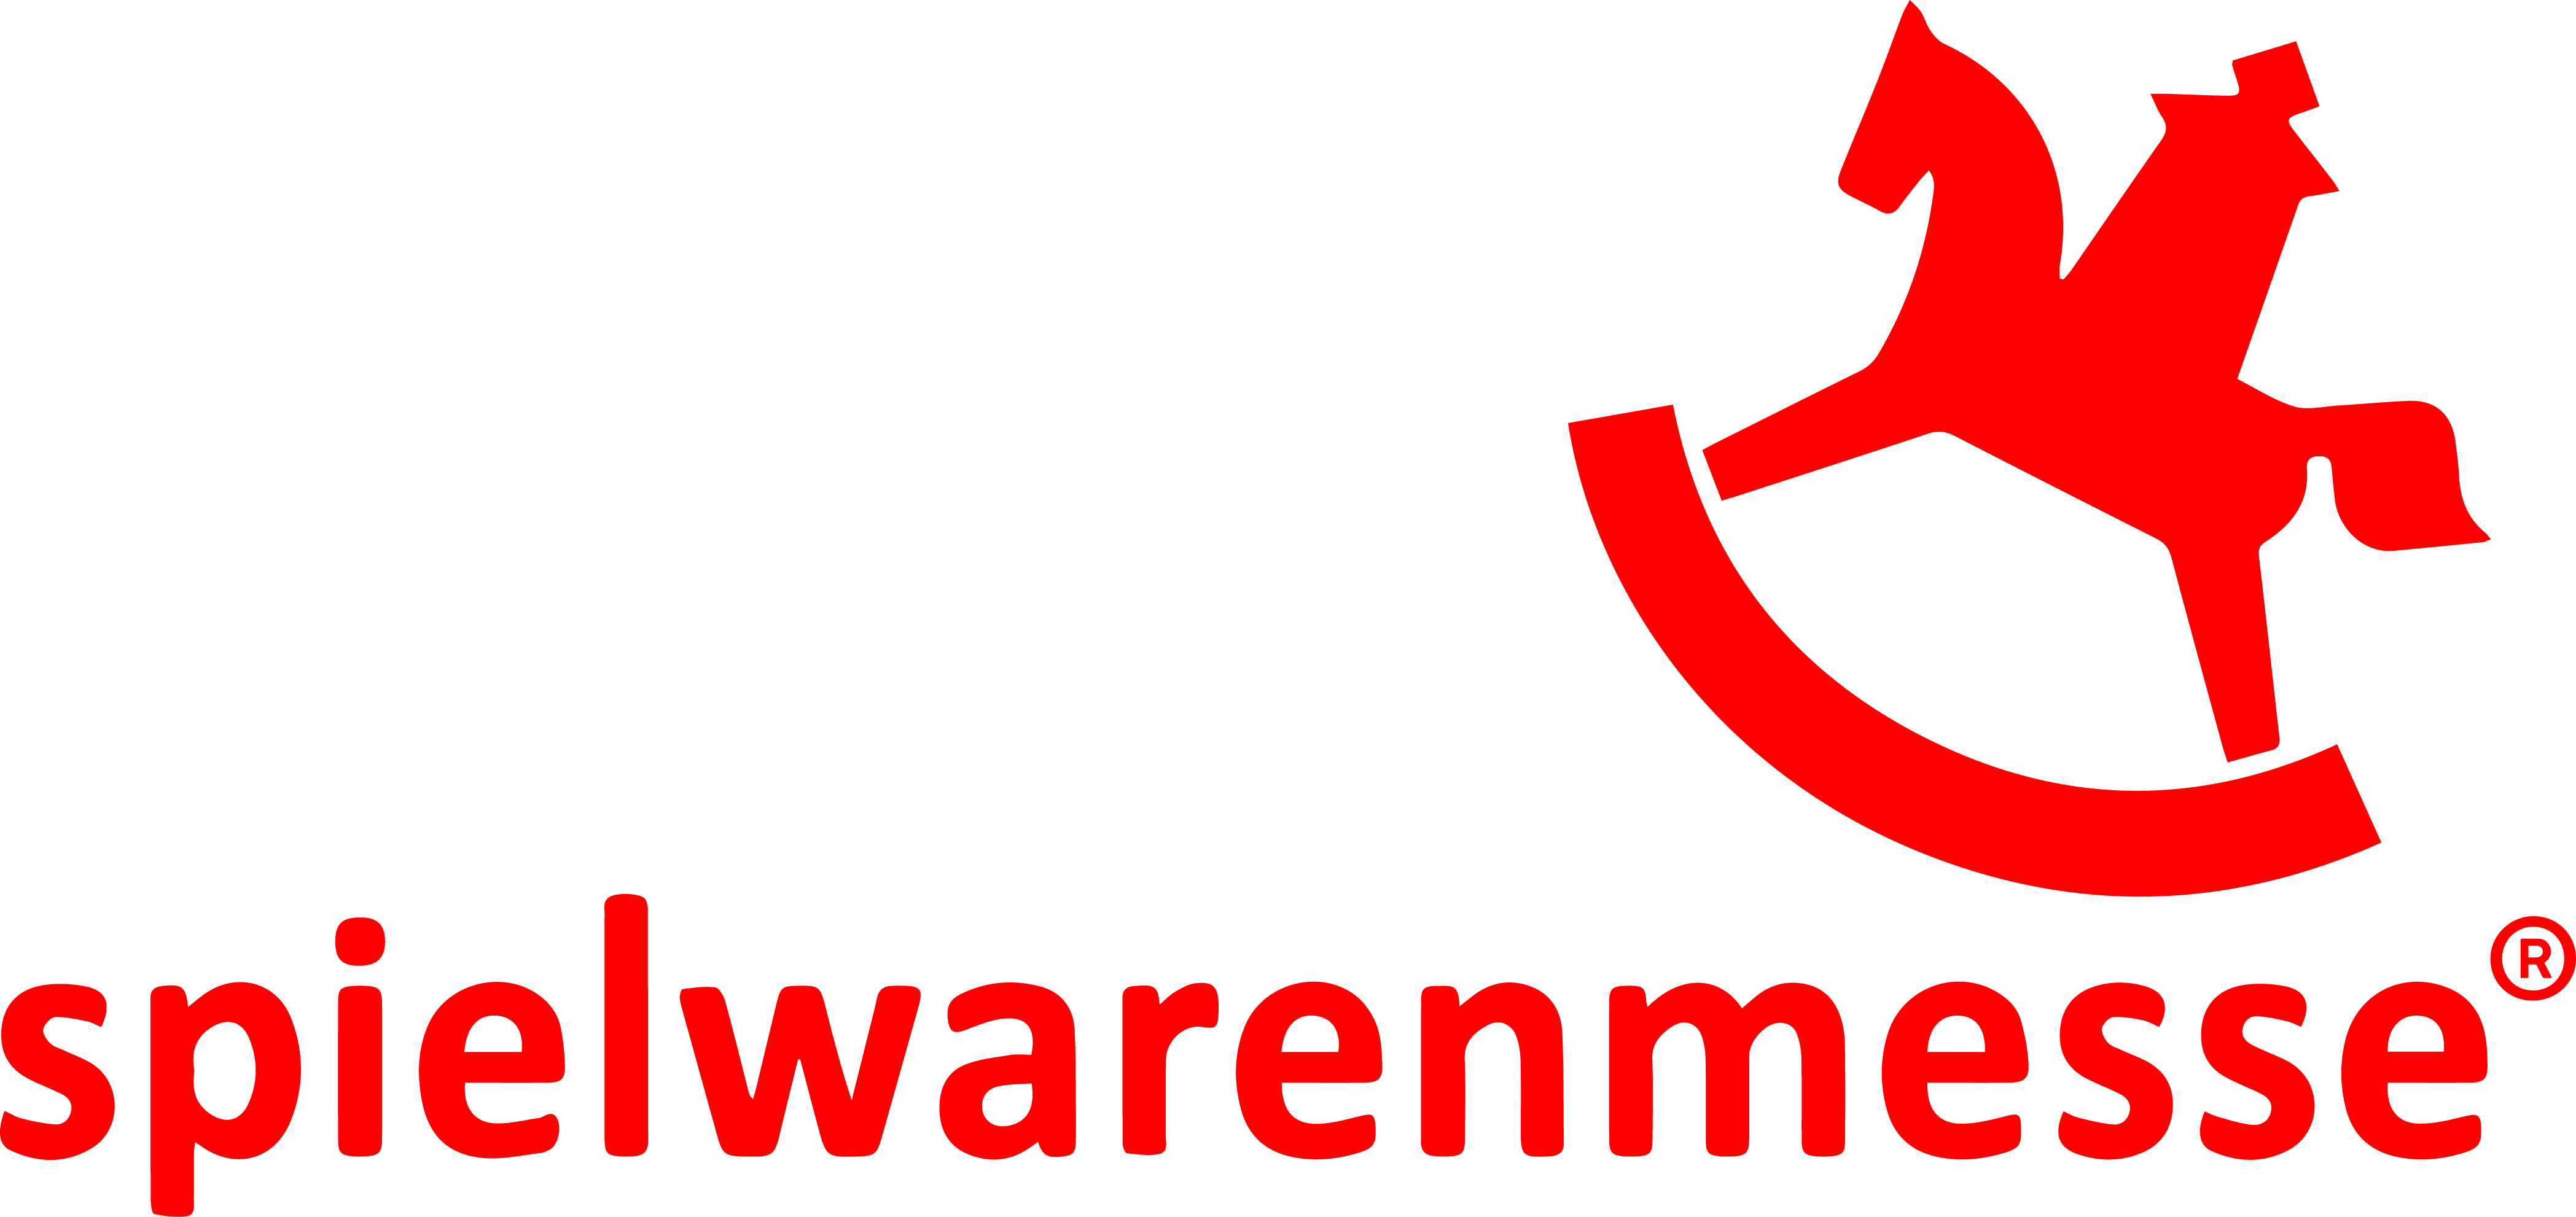 nuremberg fair logo